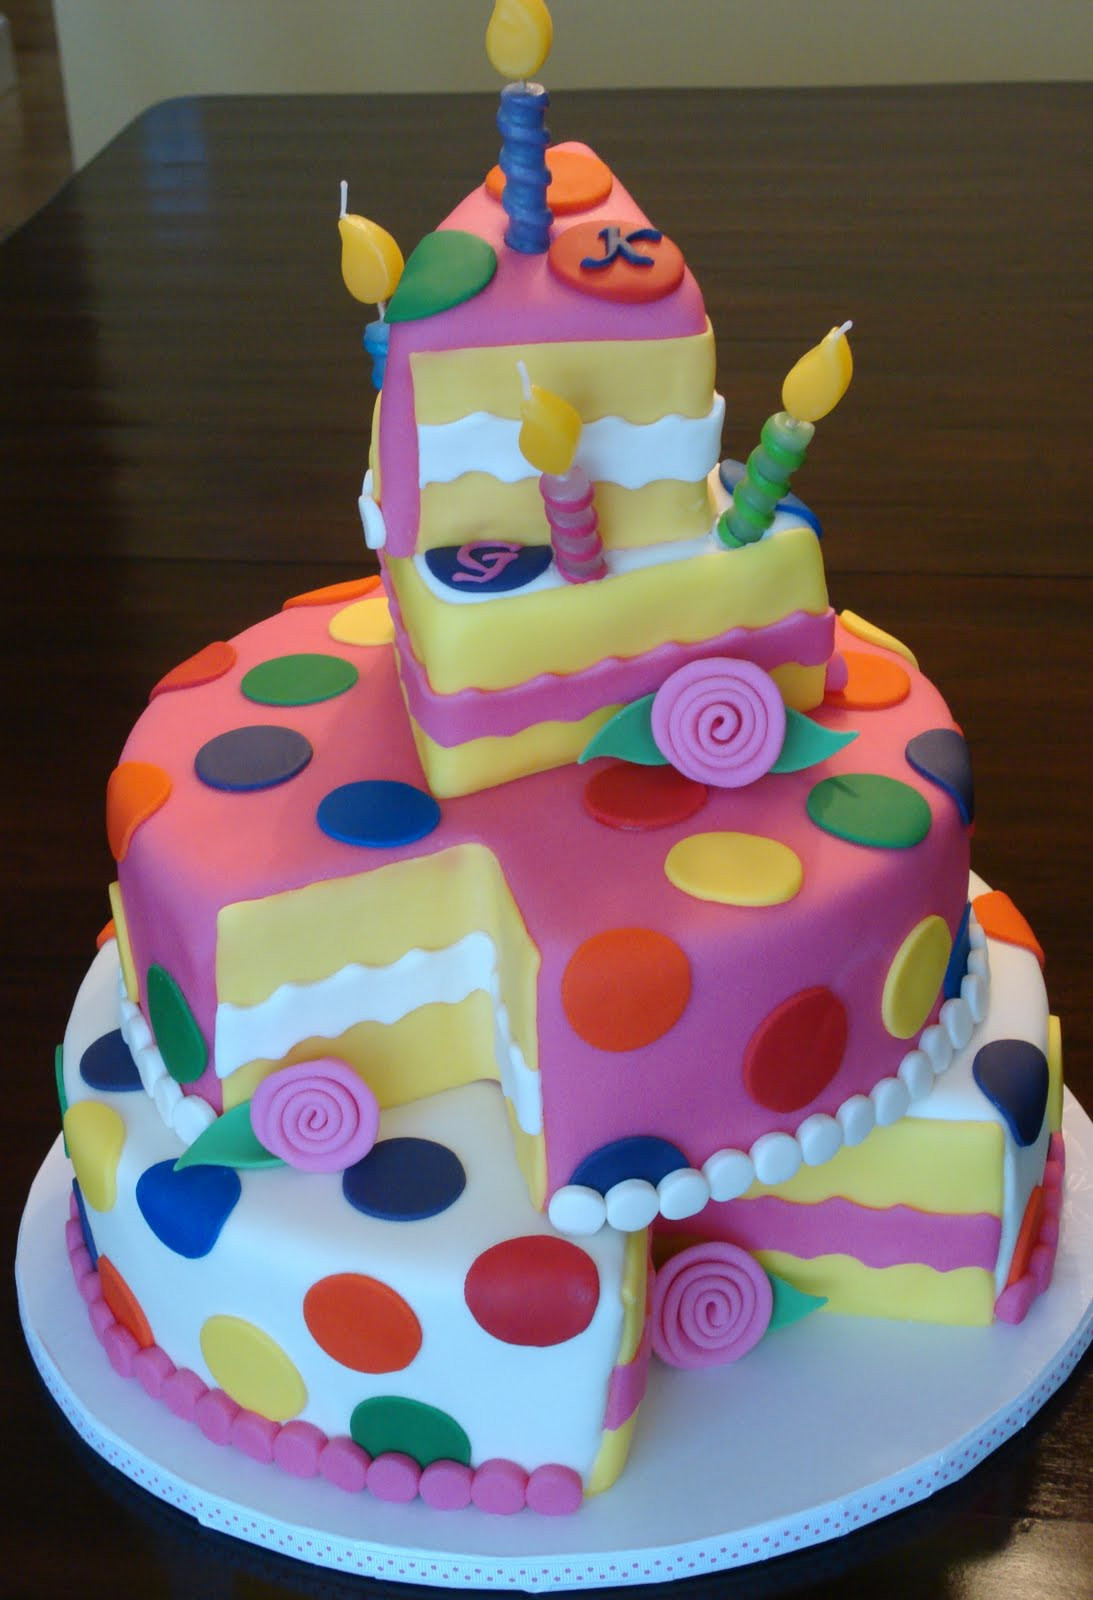 Polka Dot Birthday Cake
 Debby s Cakes Topsy Turvy Polka Dot Birthday "Cake"